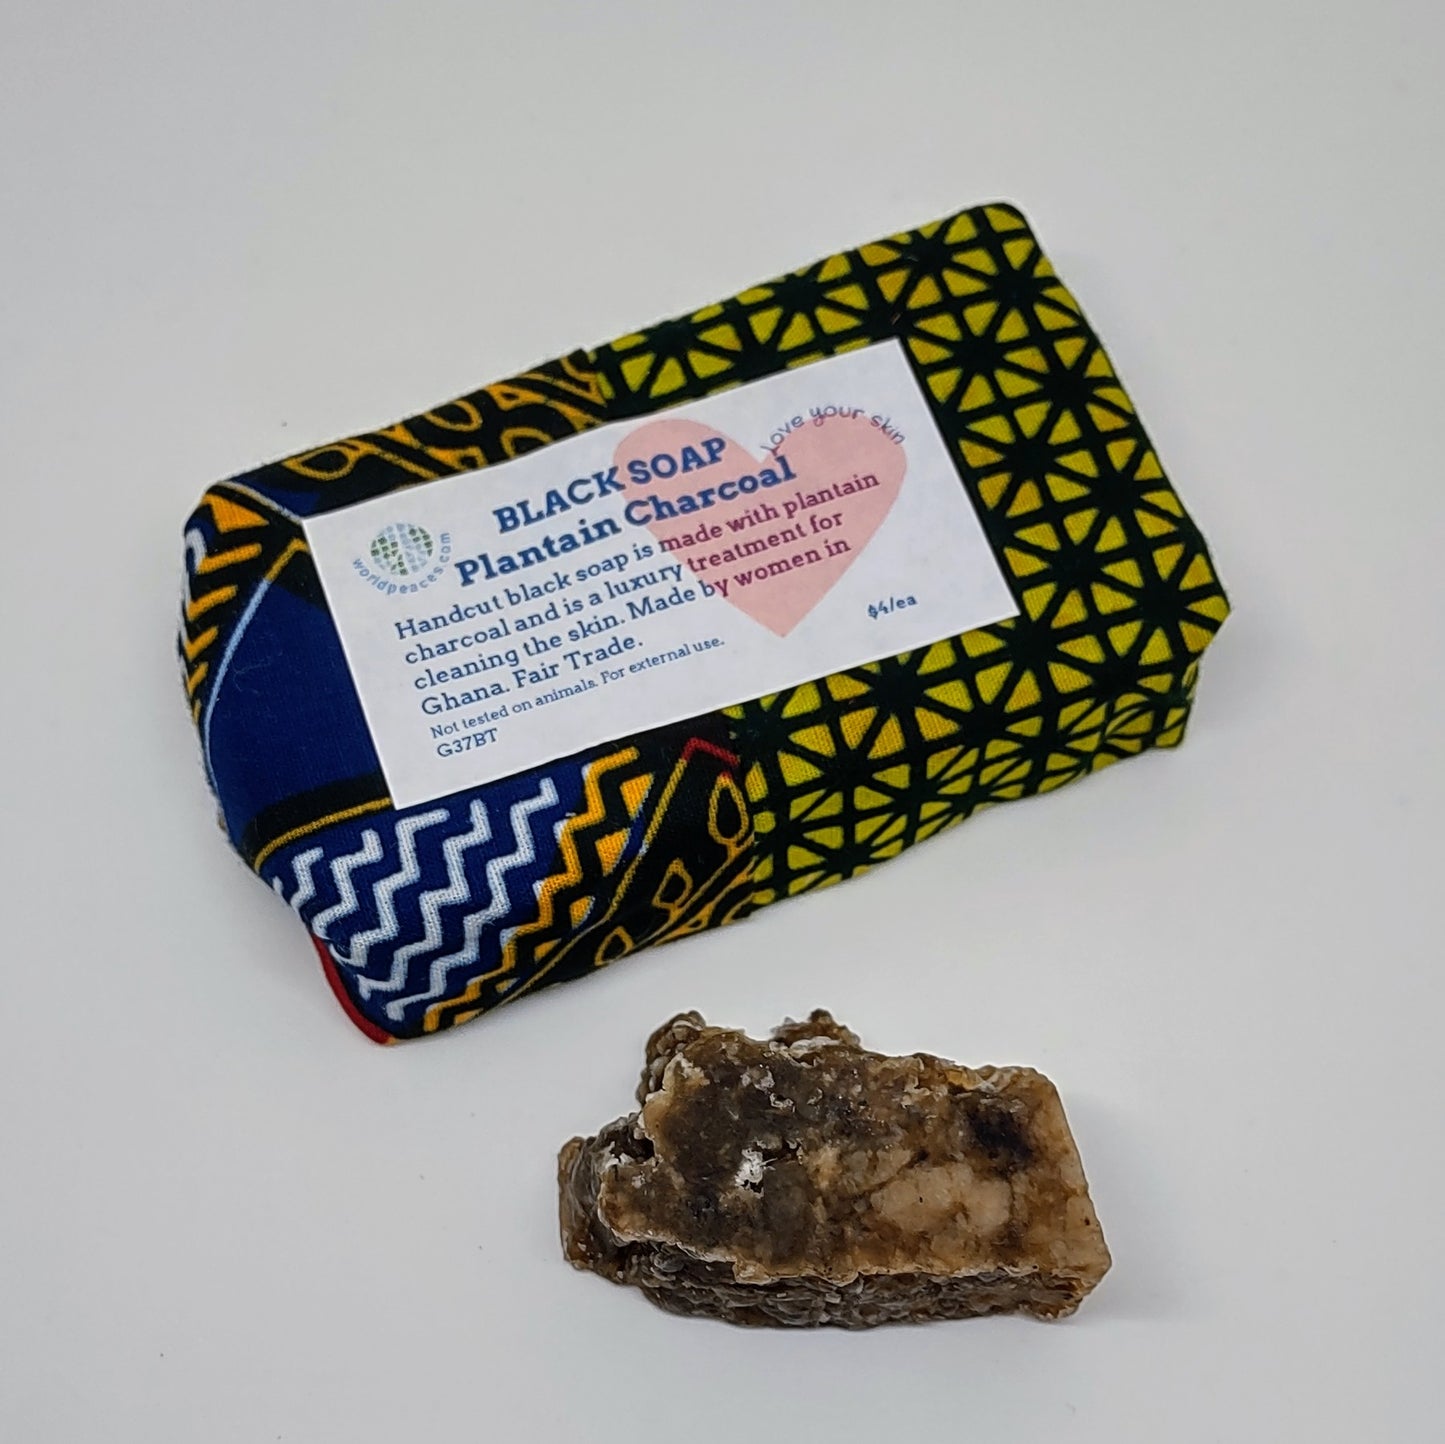 Charcoal Black Soap, Made in Ghana